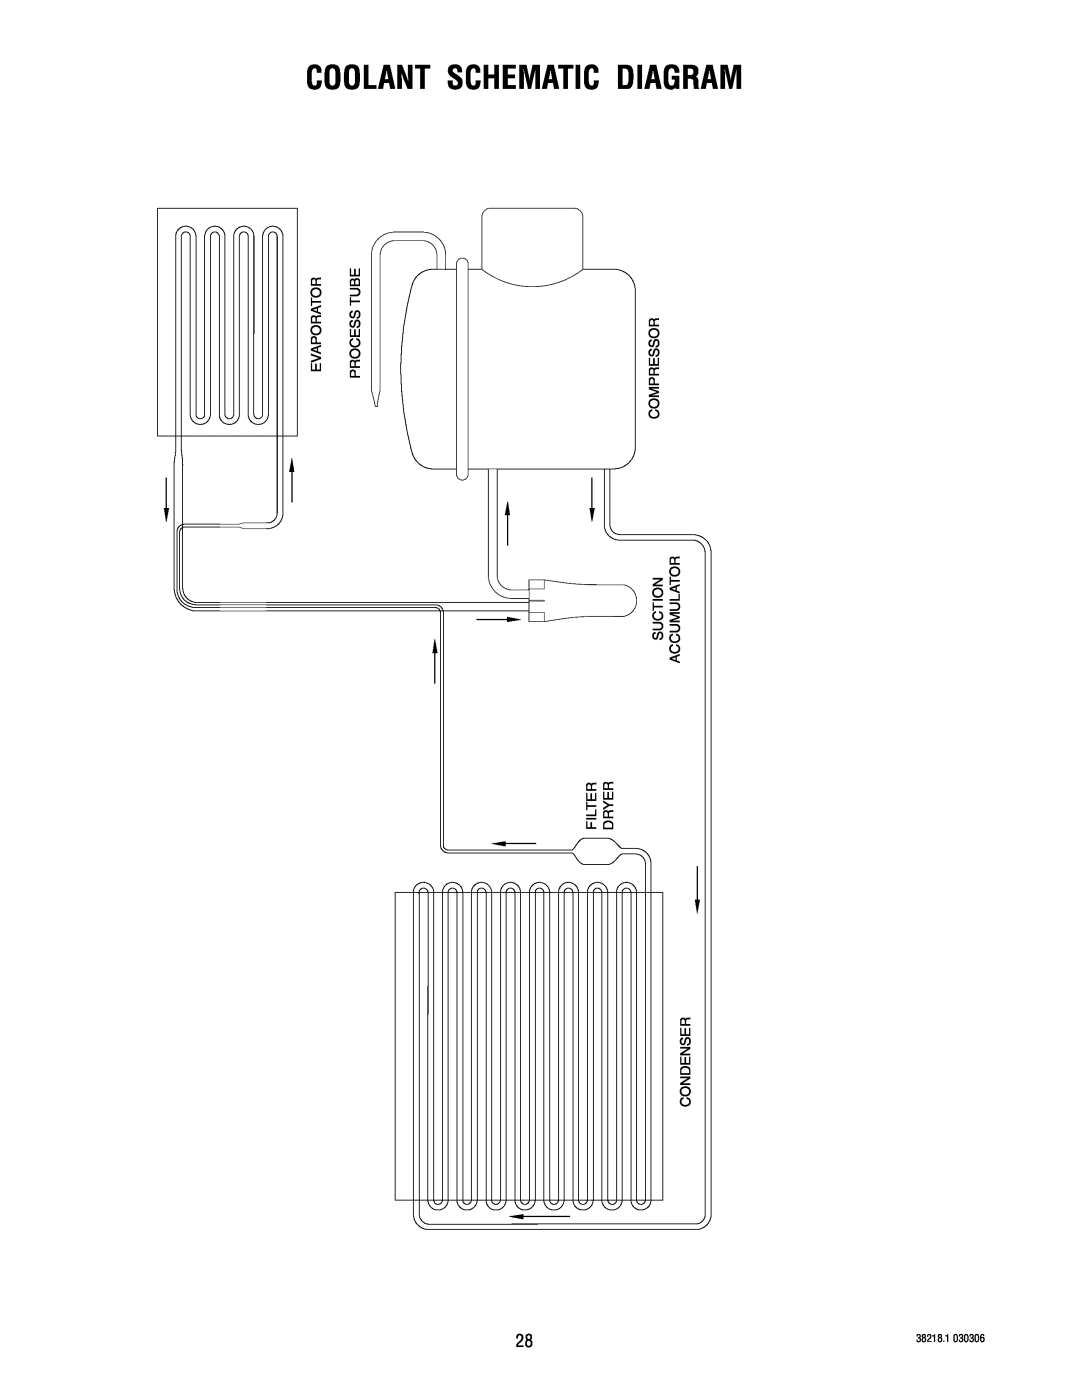 Bunn S/N 0005473 & UP Coolant Schematic Diagram, Evaporator, Process Tube, Compressor, Accumulator Suction Dryer, 38218.1 